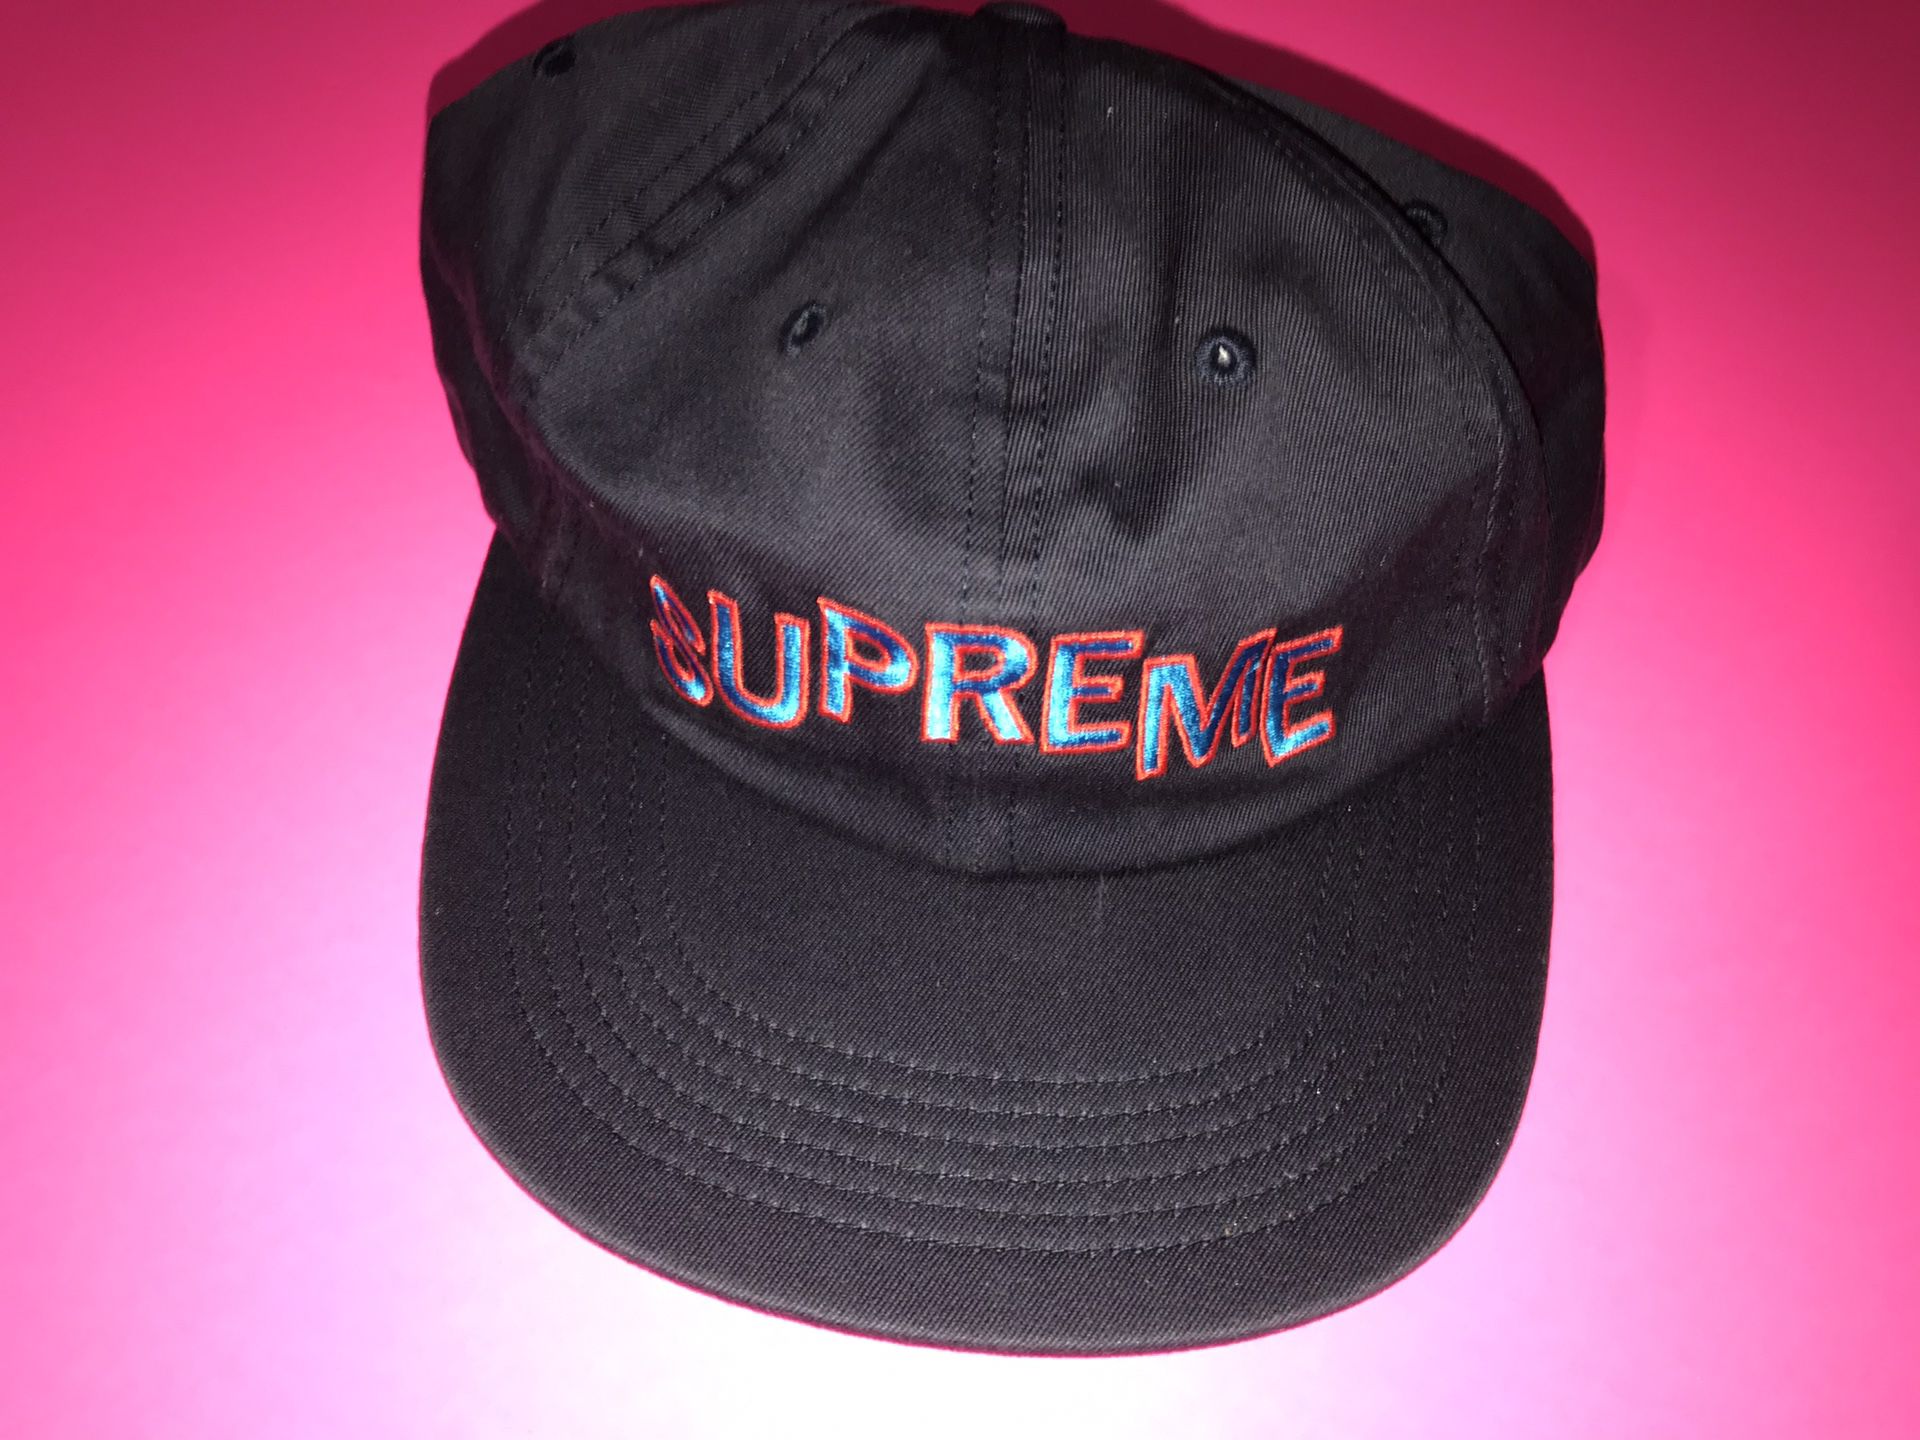 New Supreme Hat Black 6 panel cap